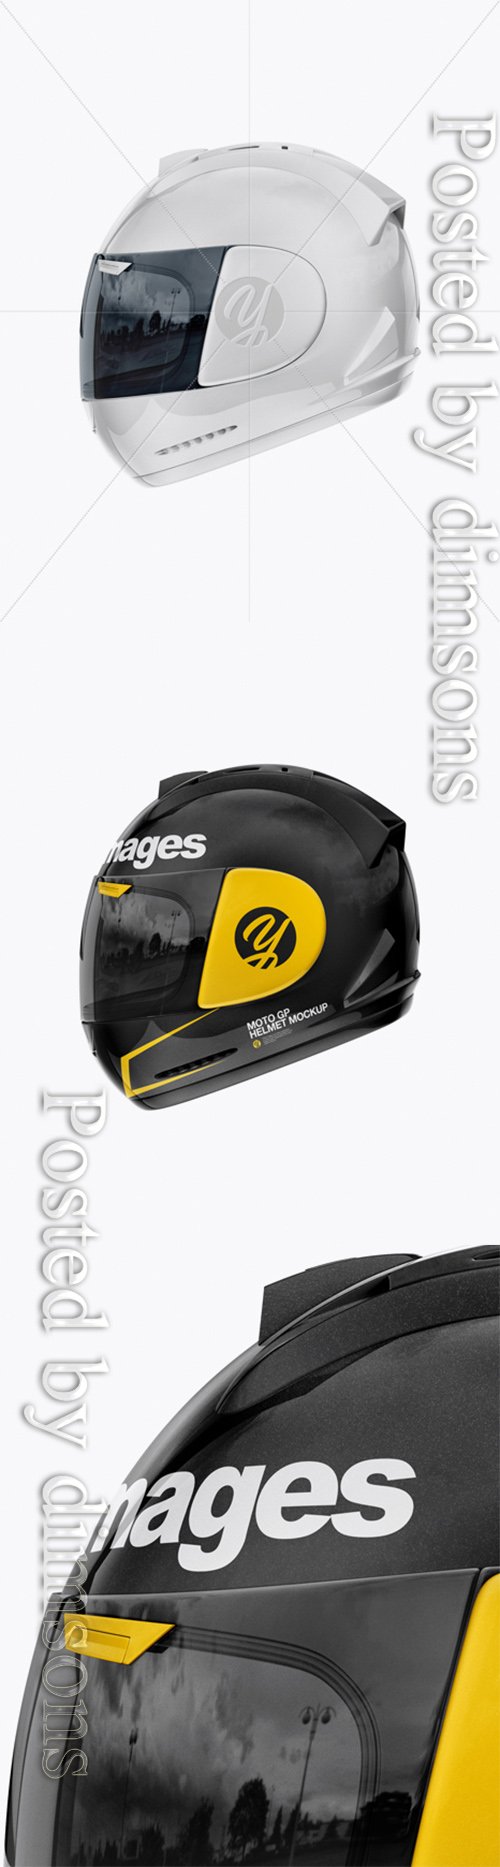 Moto GP Helmet Mockup - Side View 25088 Layered TIF